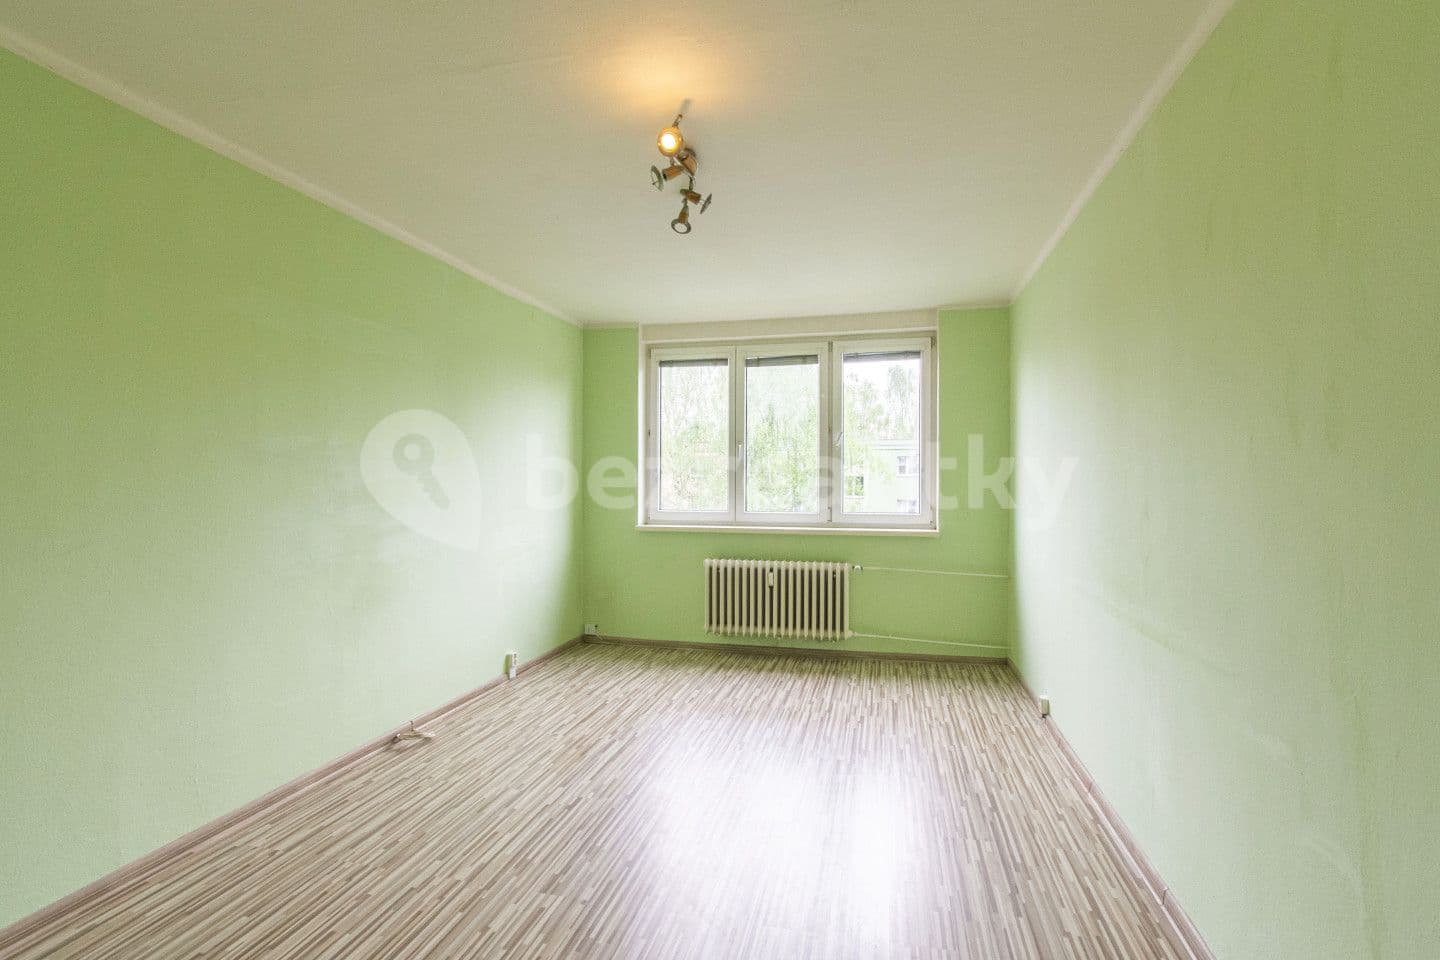 3 bedroom flat for sale, 72 m², Volgogradská, Ostrava, Moravskoslezský Region